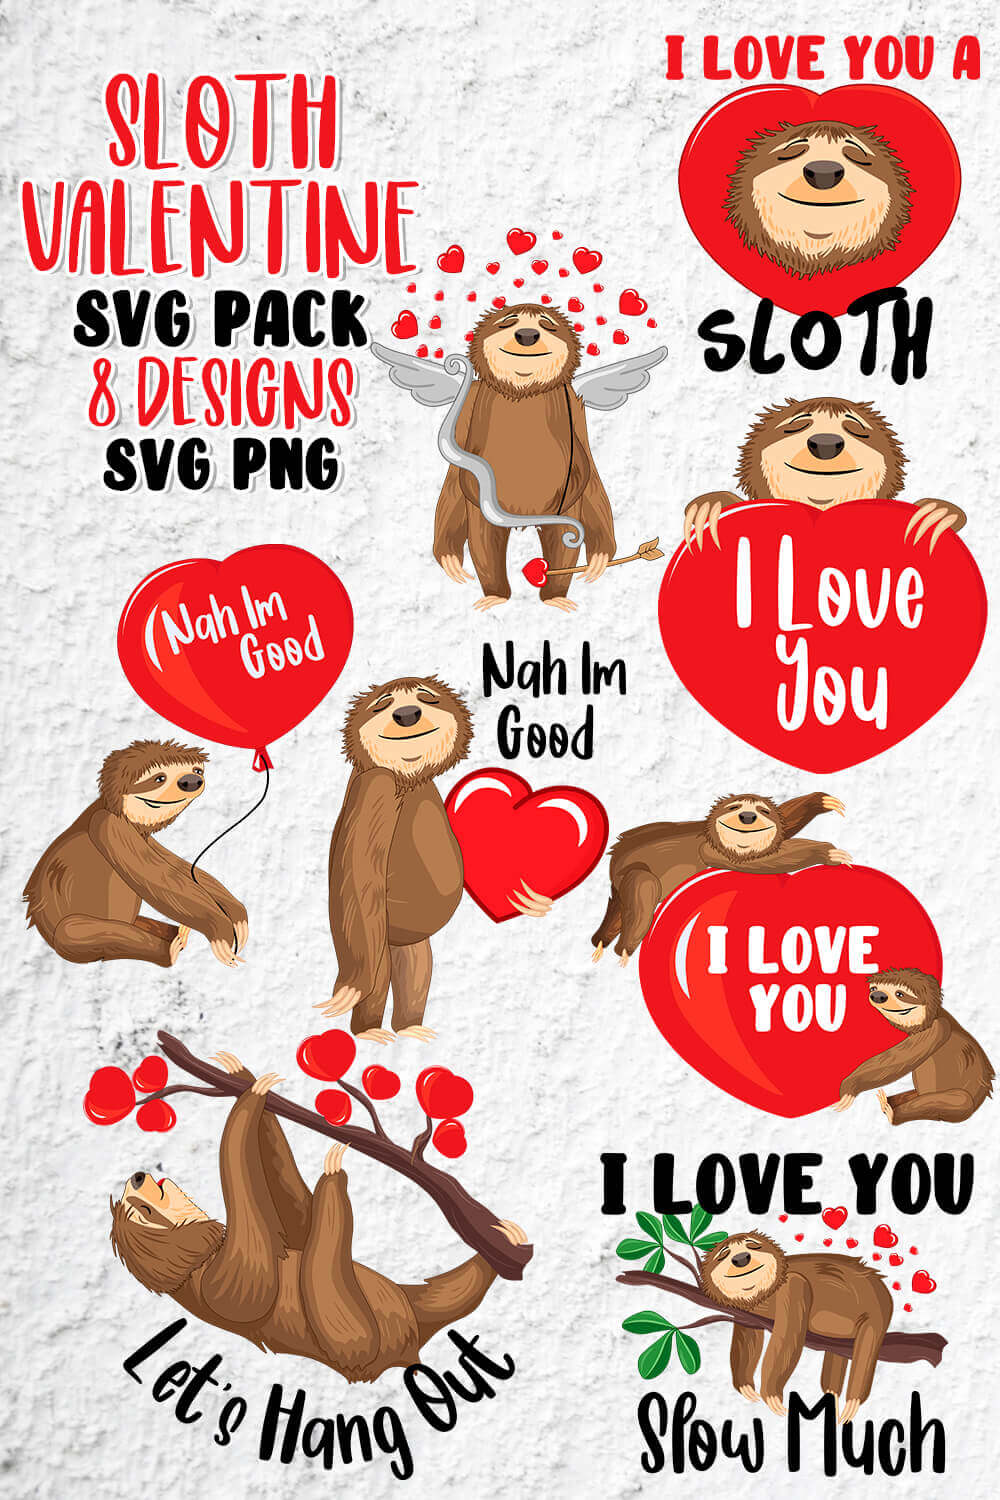 Slotty valentine's day stickers.